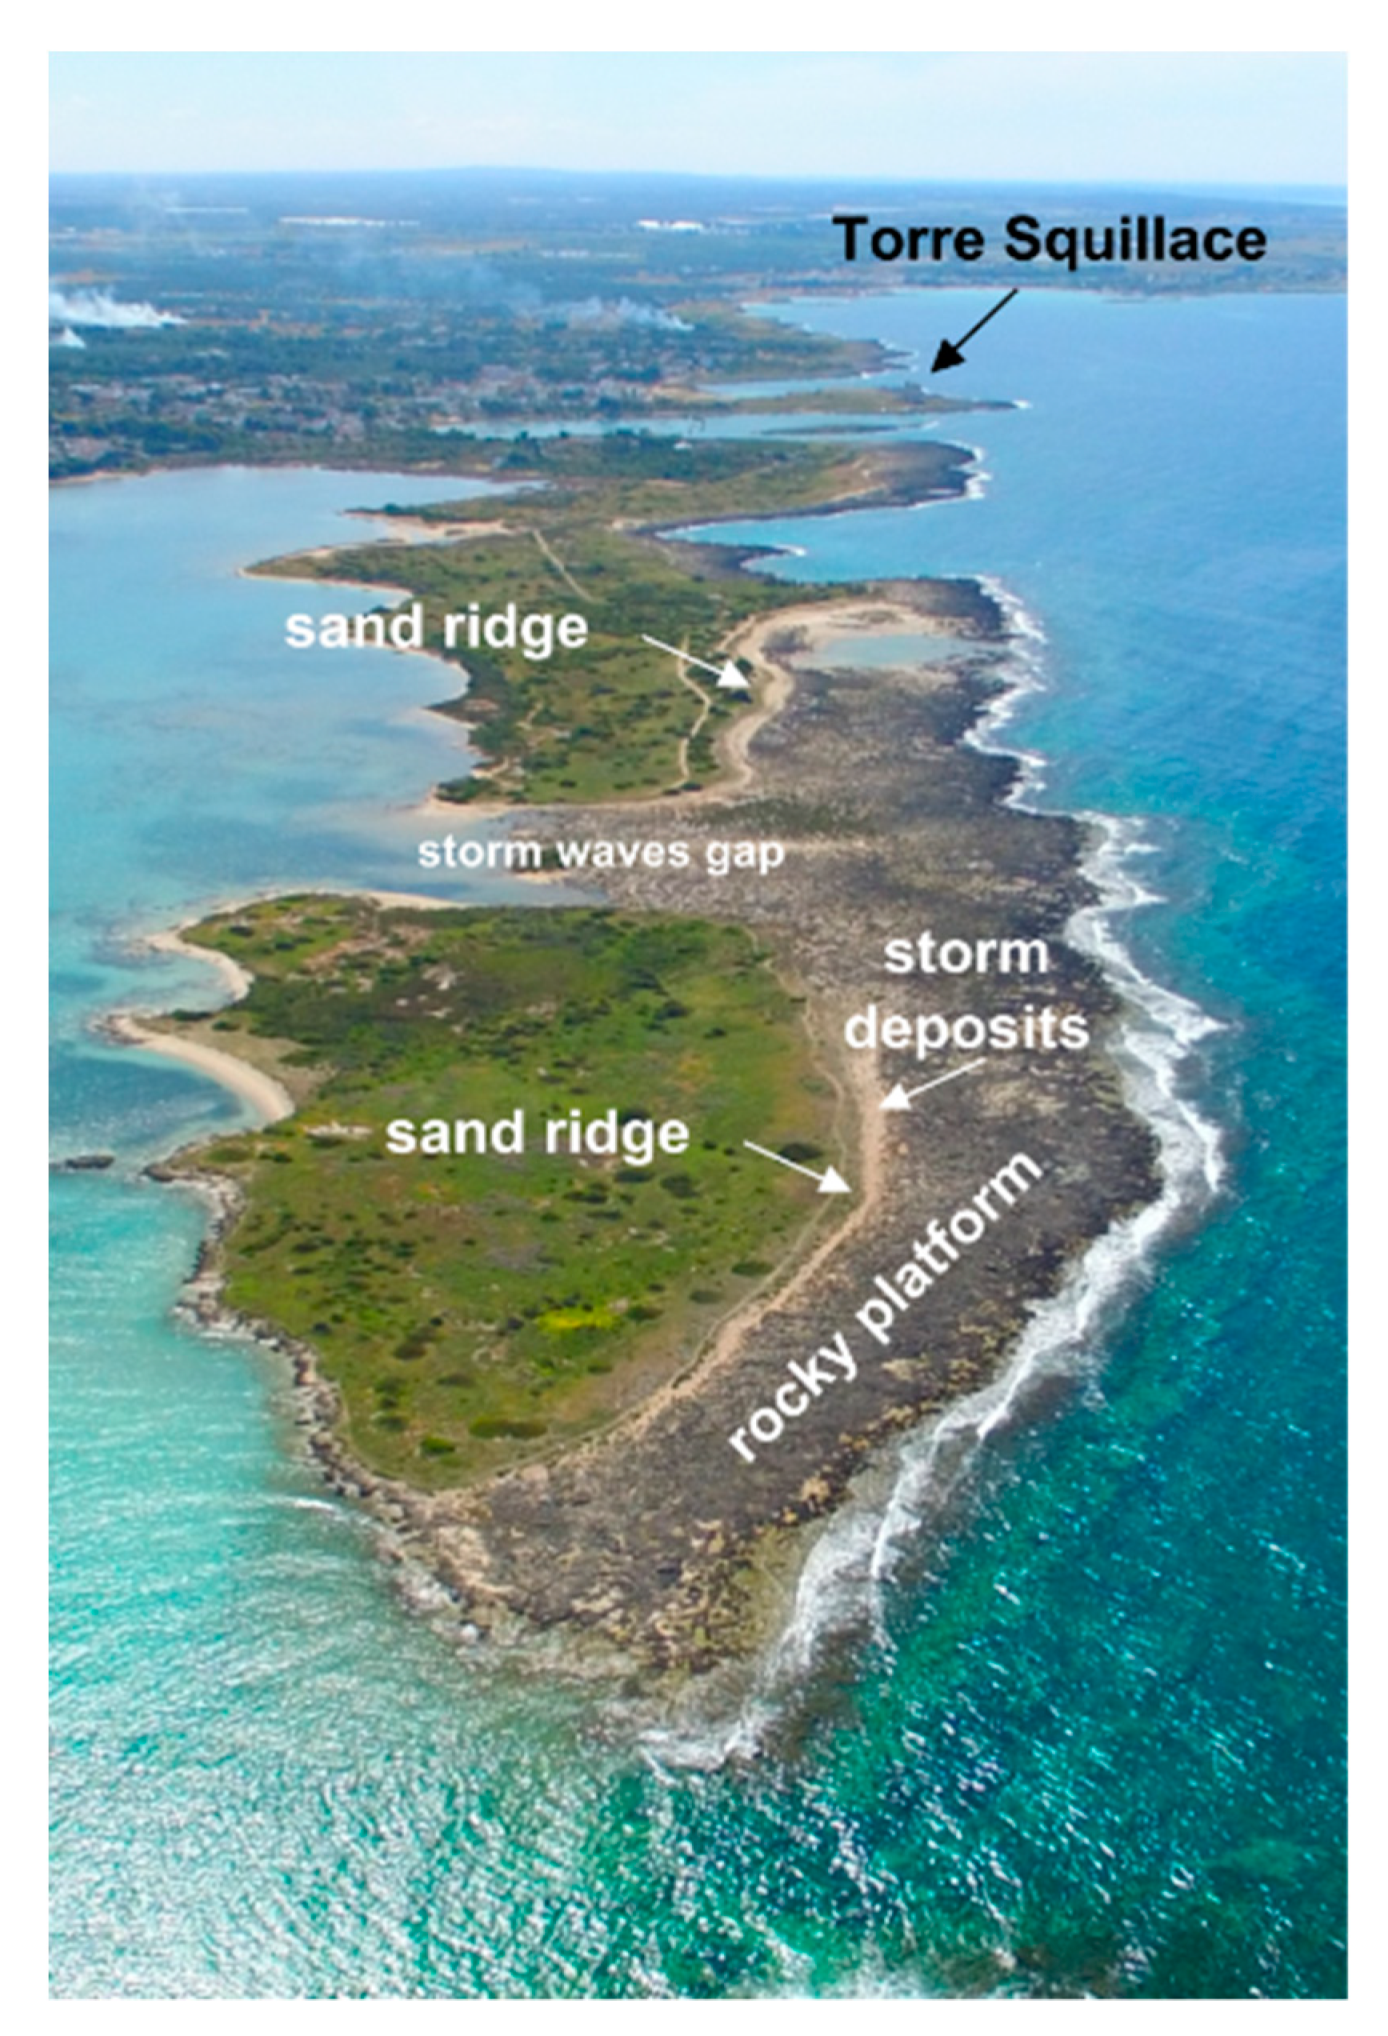 Geosciences Free Full Text Sand Ridges On Rocky Coastal Platforms As Markers Of Tsunami Impact A Multi Disciplinary Analysis Along The Ionian Coast Of Southern Apulia Italy Html